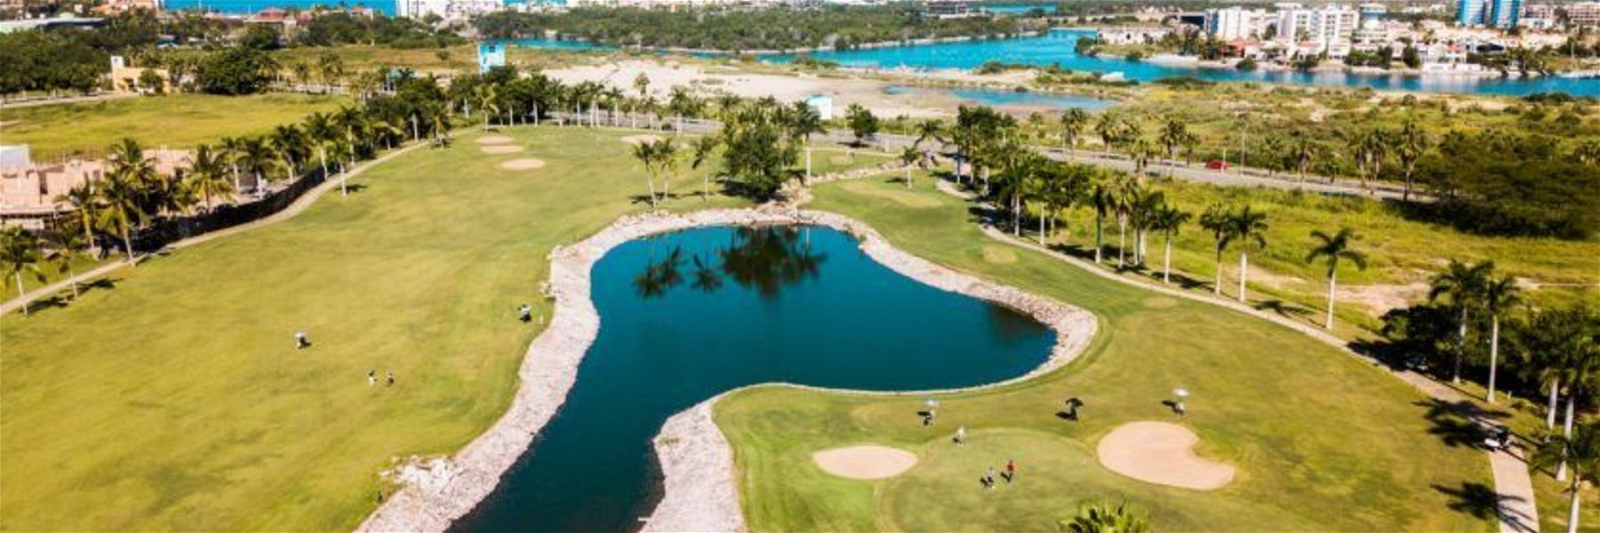 Golf Vacation Package - El Cid Golf & Country Club